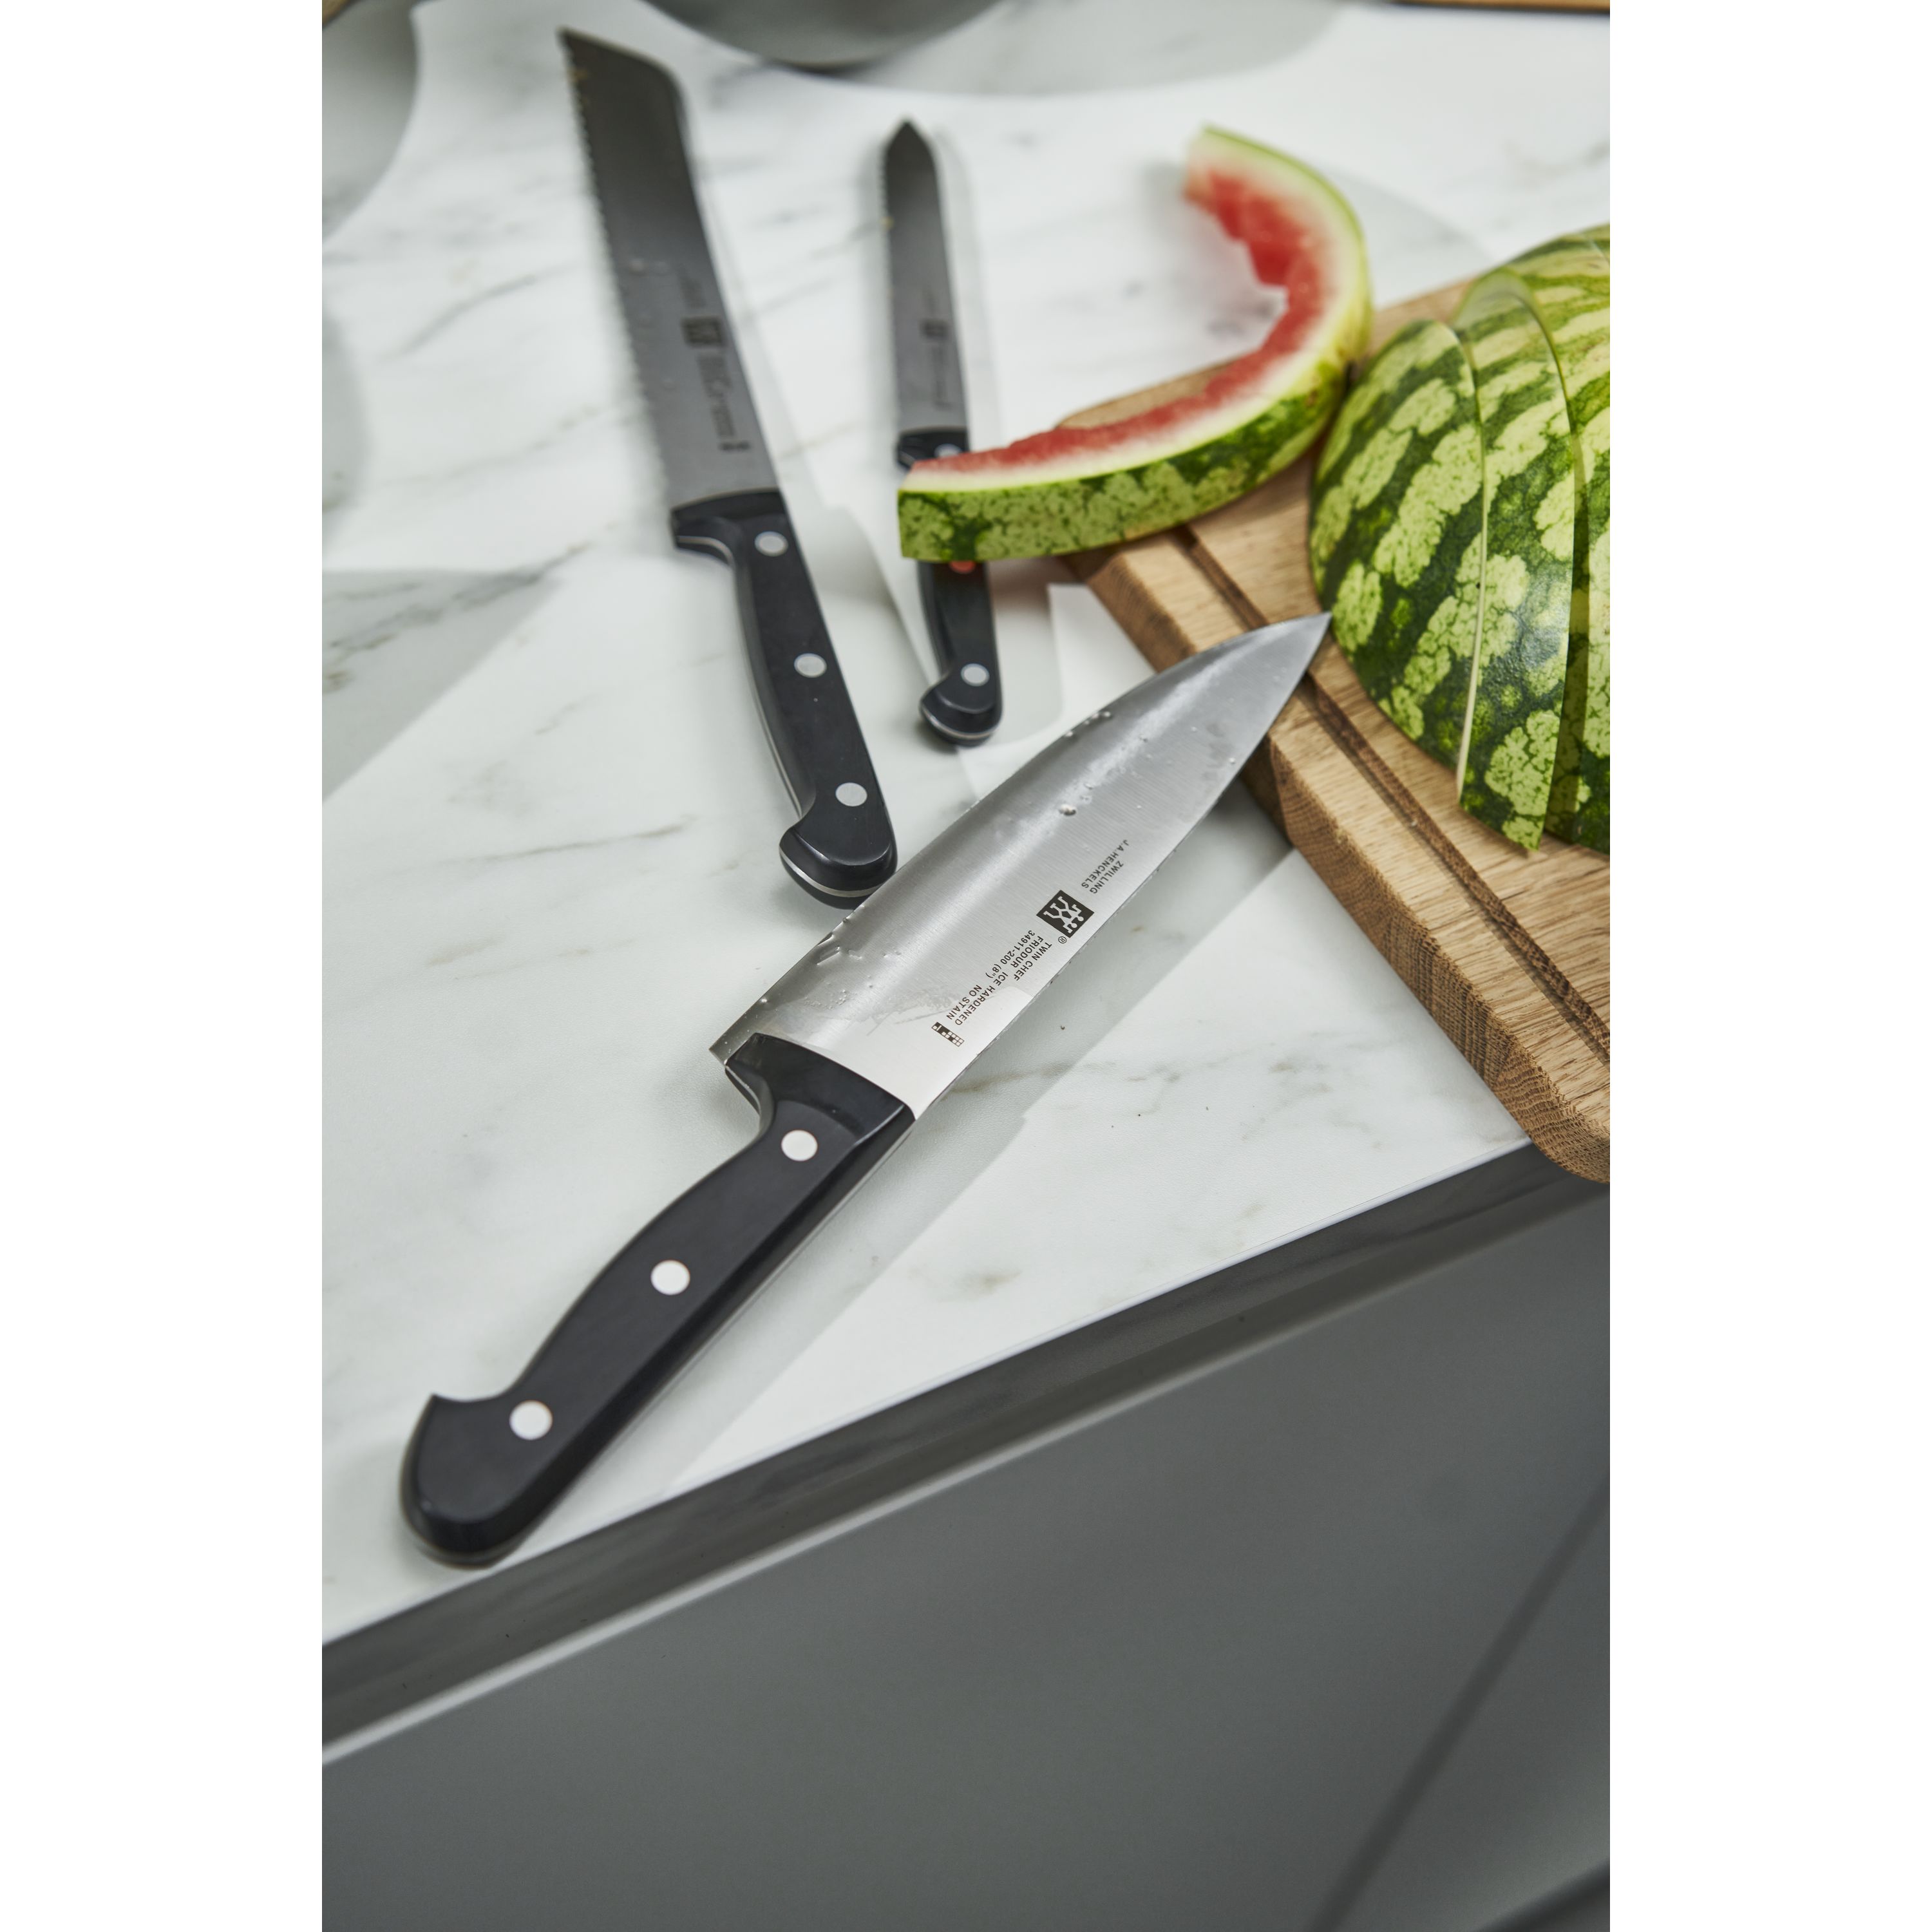 ZWILLING set Buy TWIN block Chef 2 Knife